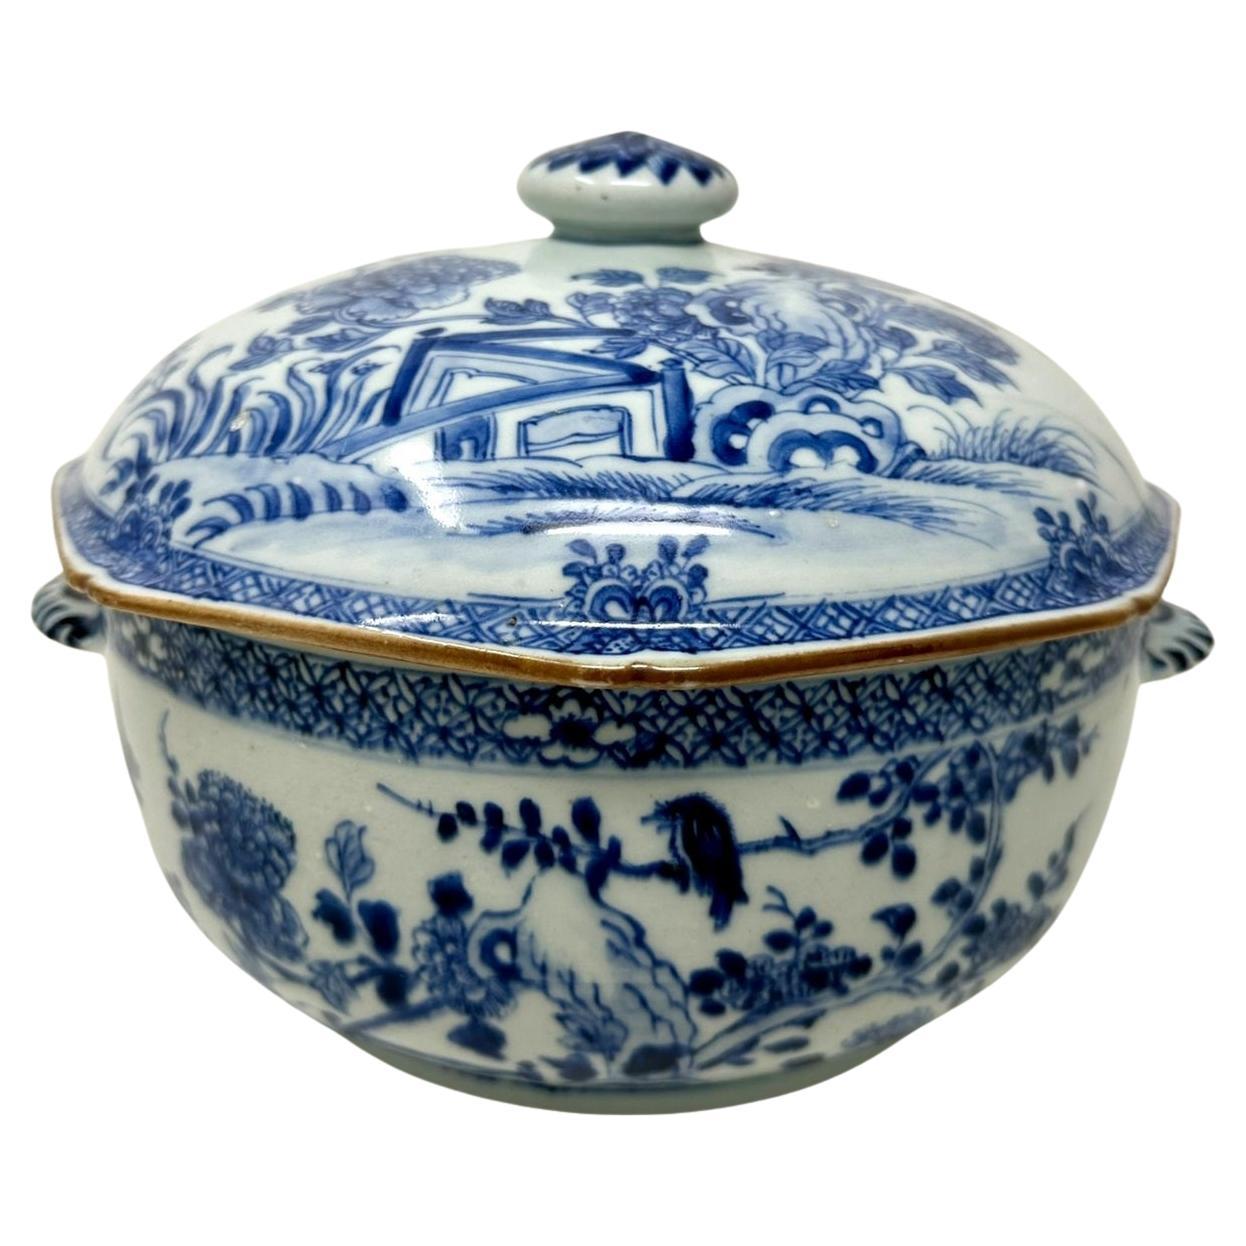 Antique Chinese Export Porcelain Blue White Chien Lung Soup Tureen Centerpiece